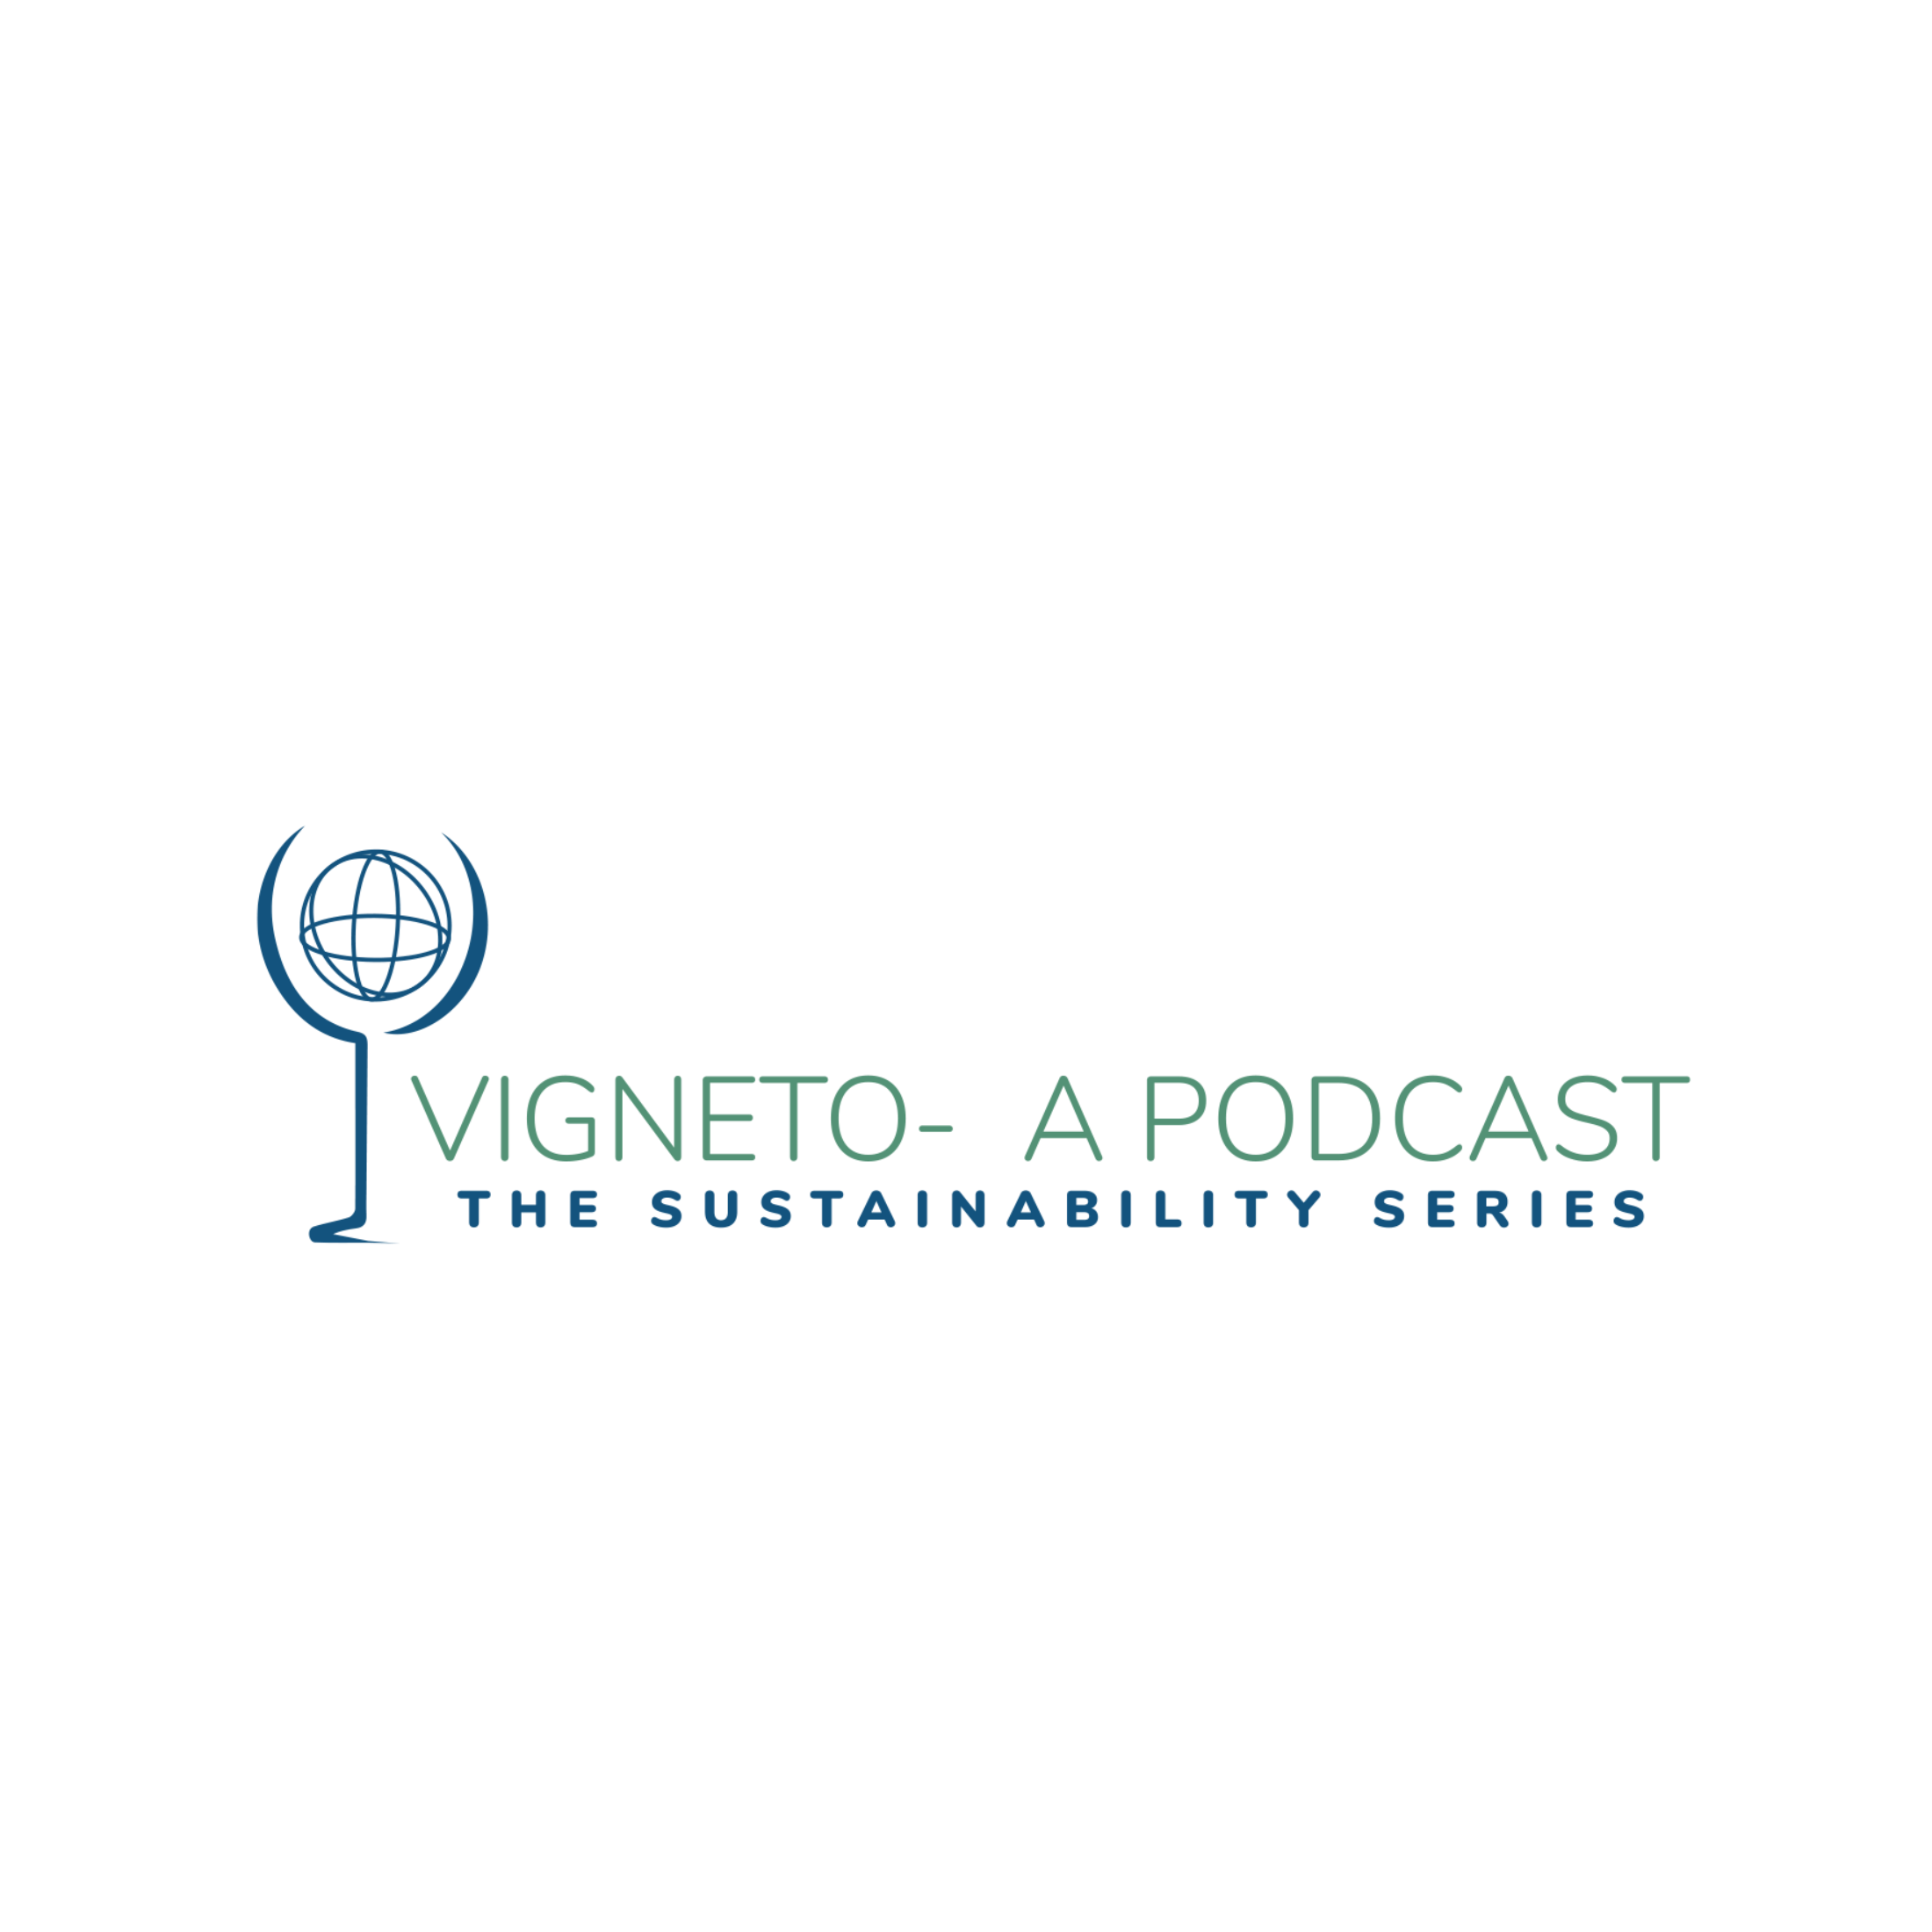 Vigneto - A Podcast